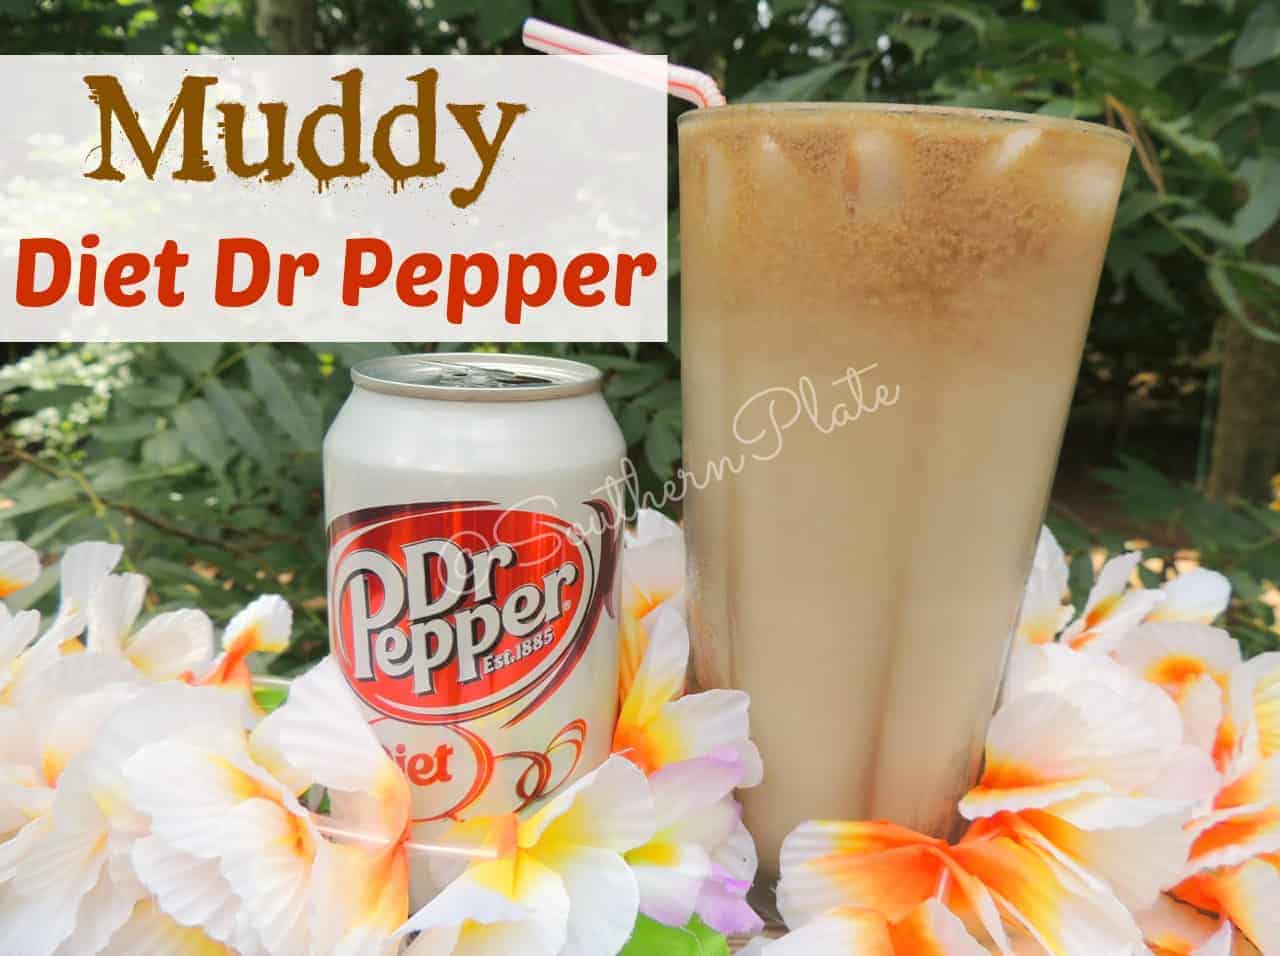 Muddy Diet Dr Pepper